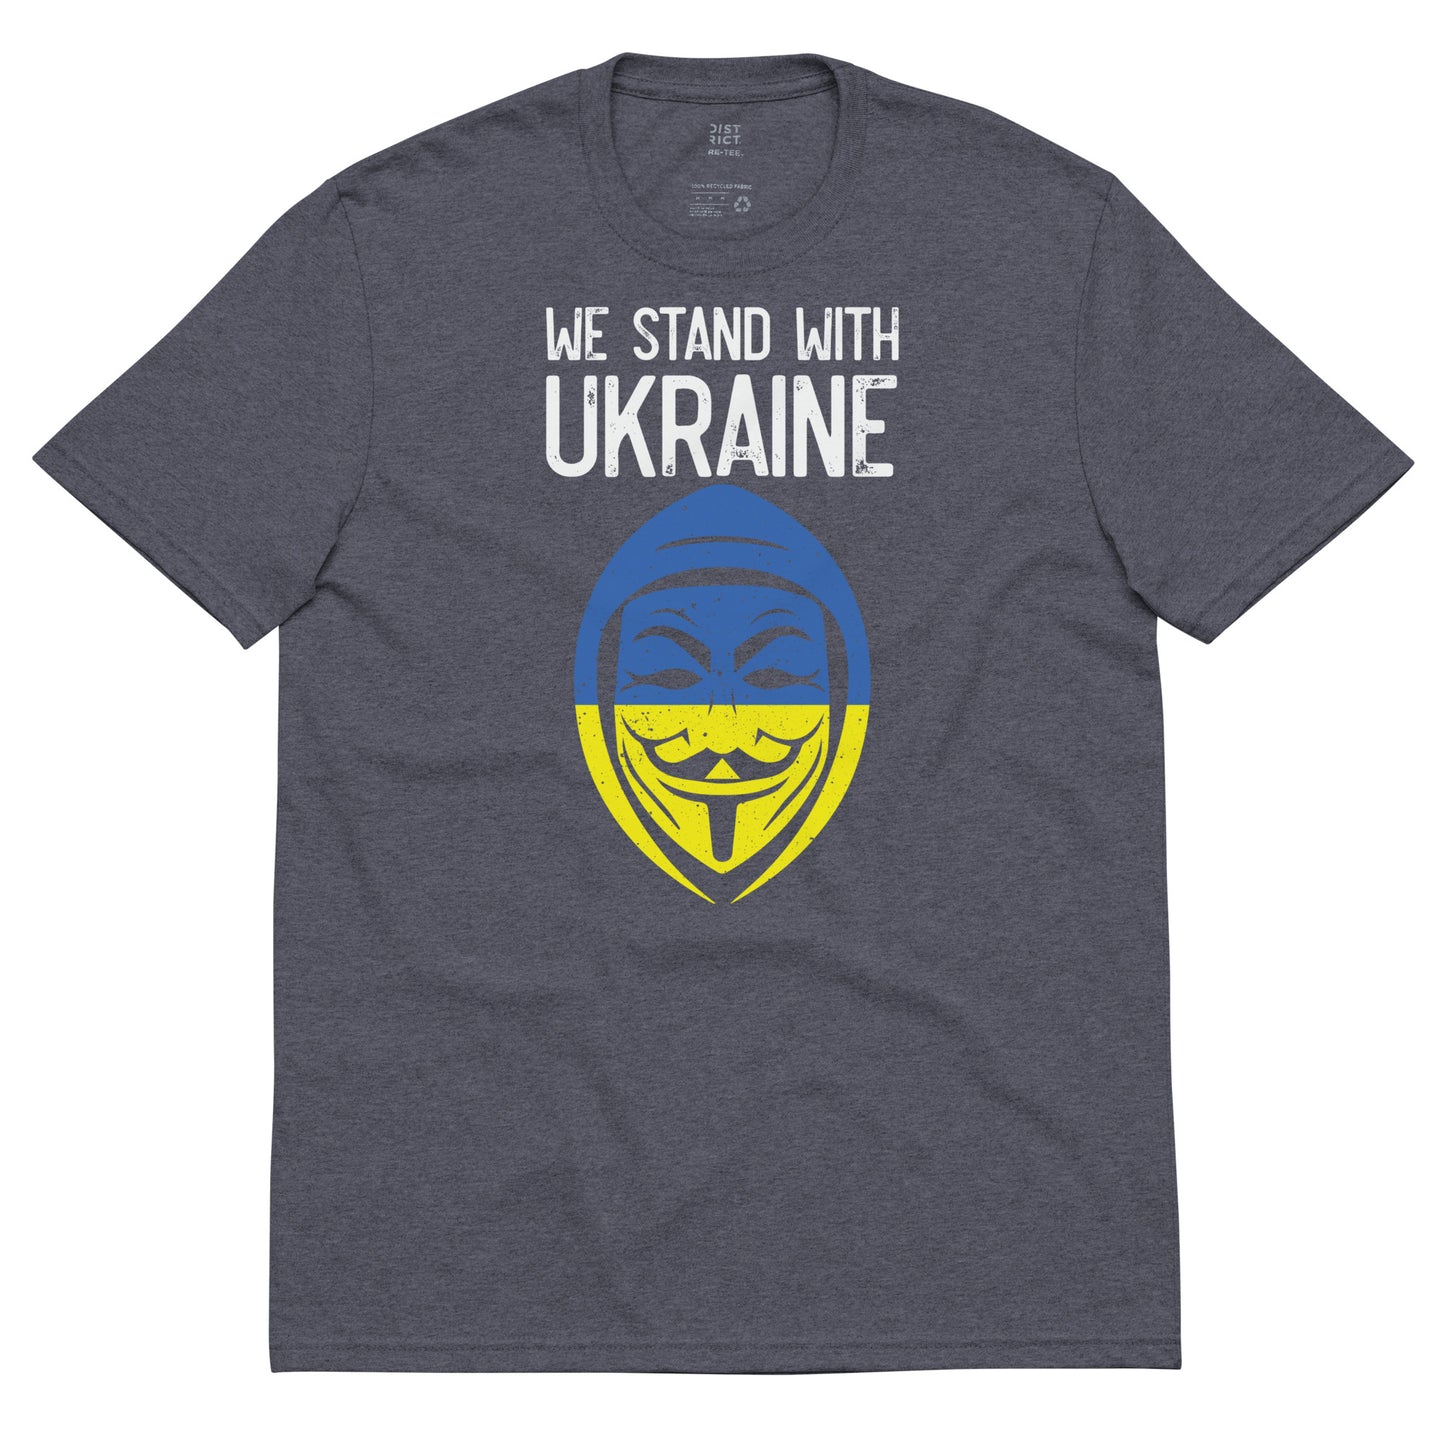 We stand with Ukraine veni vidi vici | Unisex recycled t-shirt